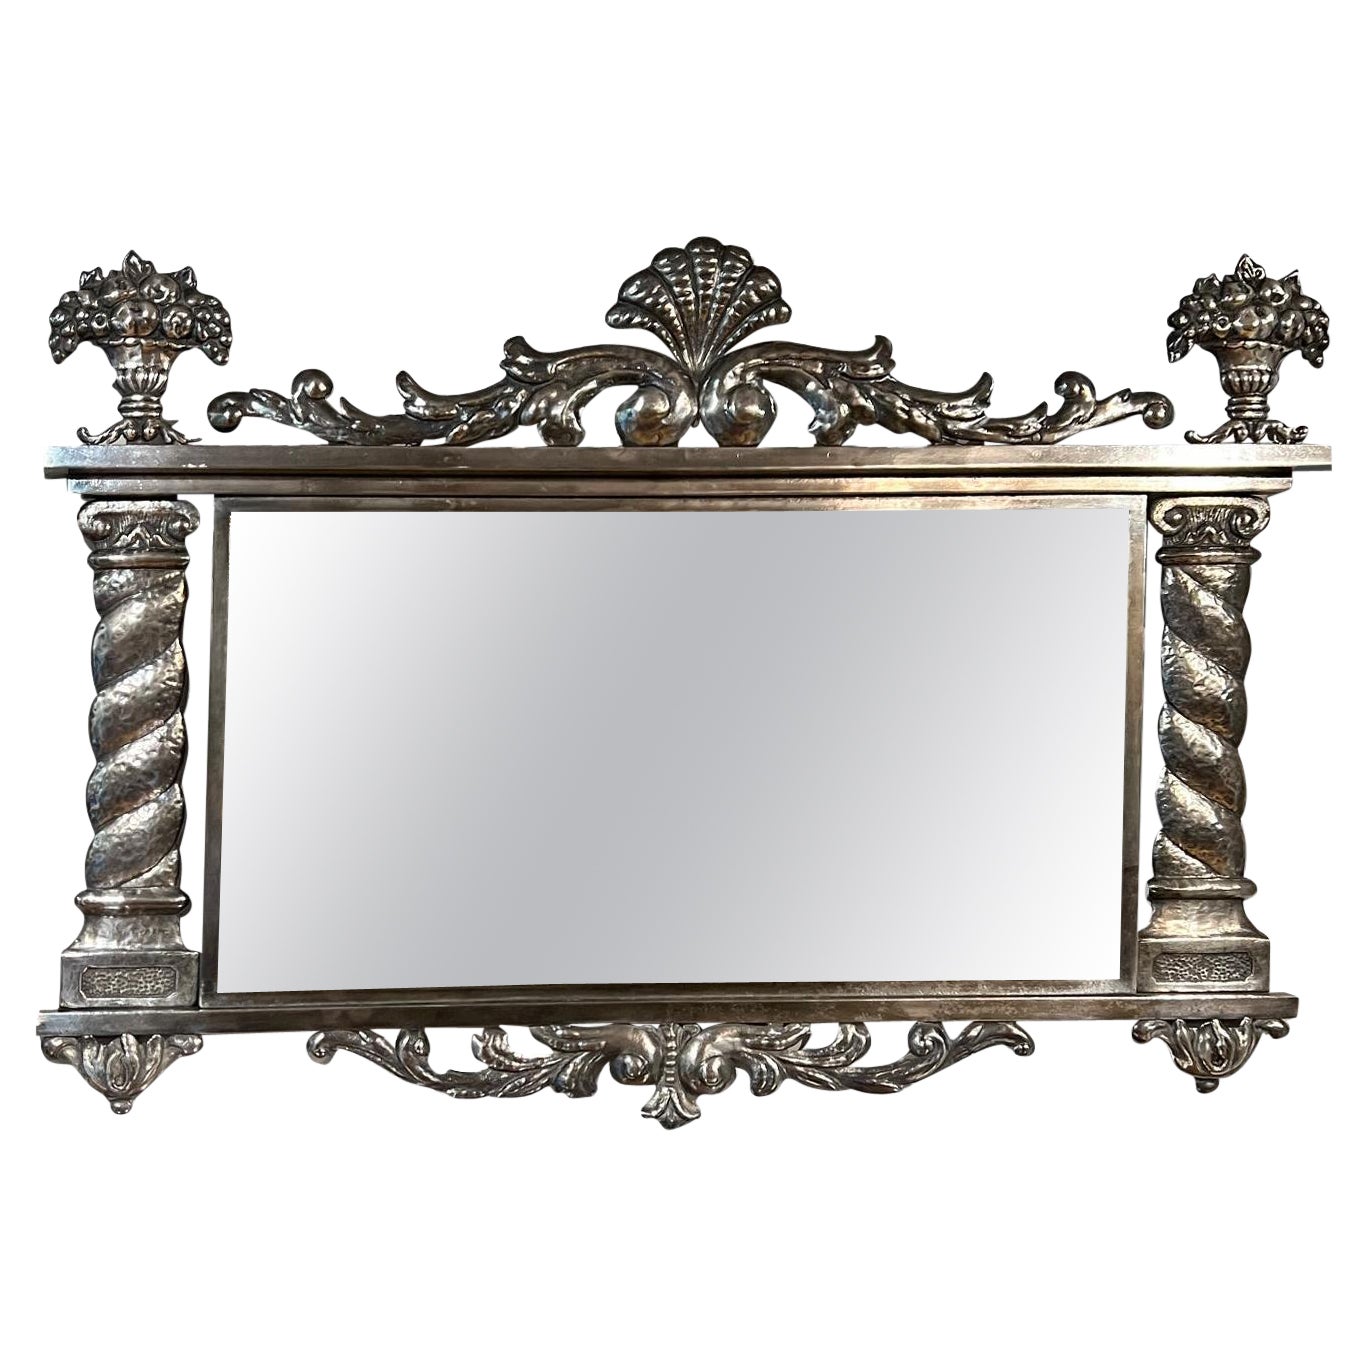 1820, Silverplated Mirror